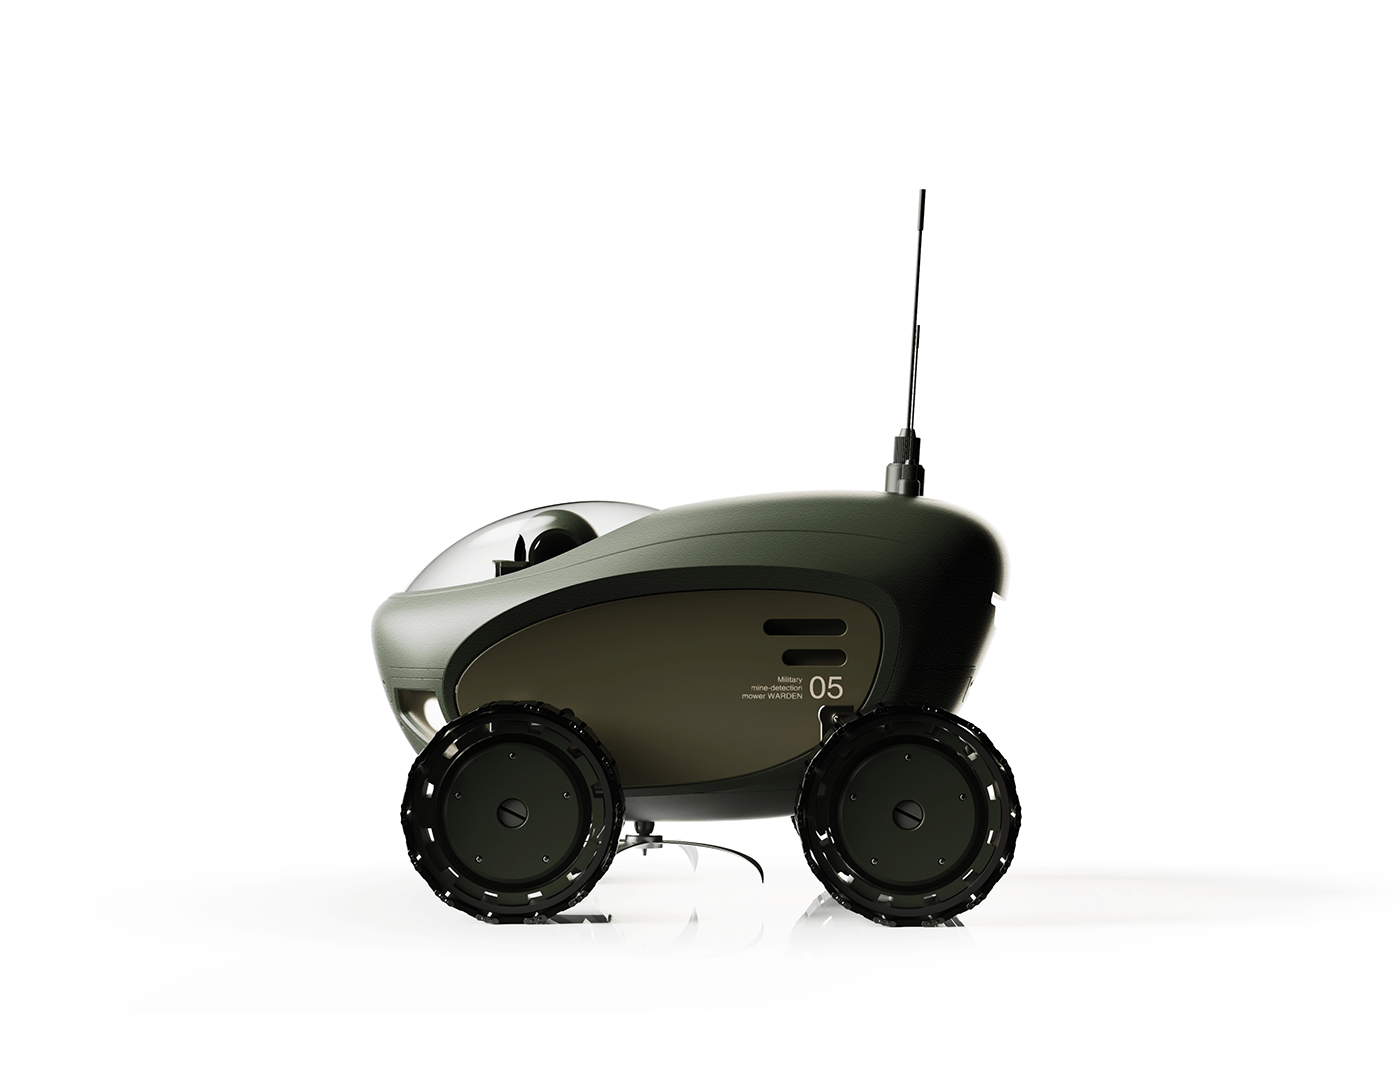 robotics robot product product design  industrial design  concept Military mobility 3D Vehicle Design